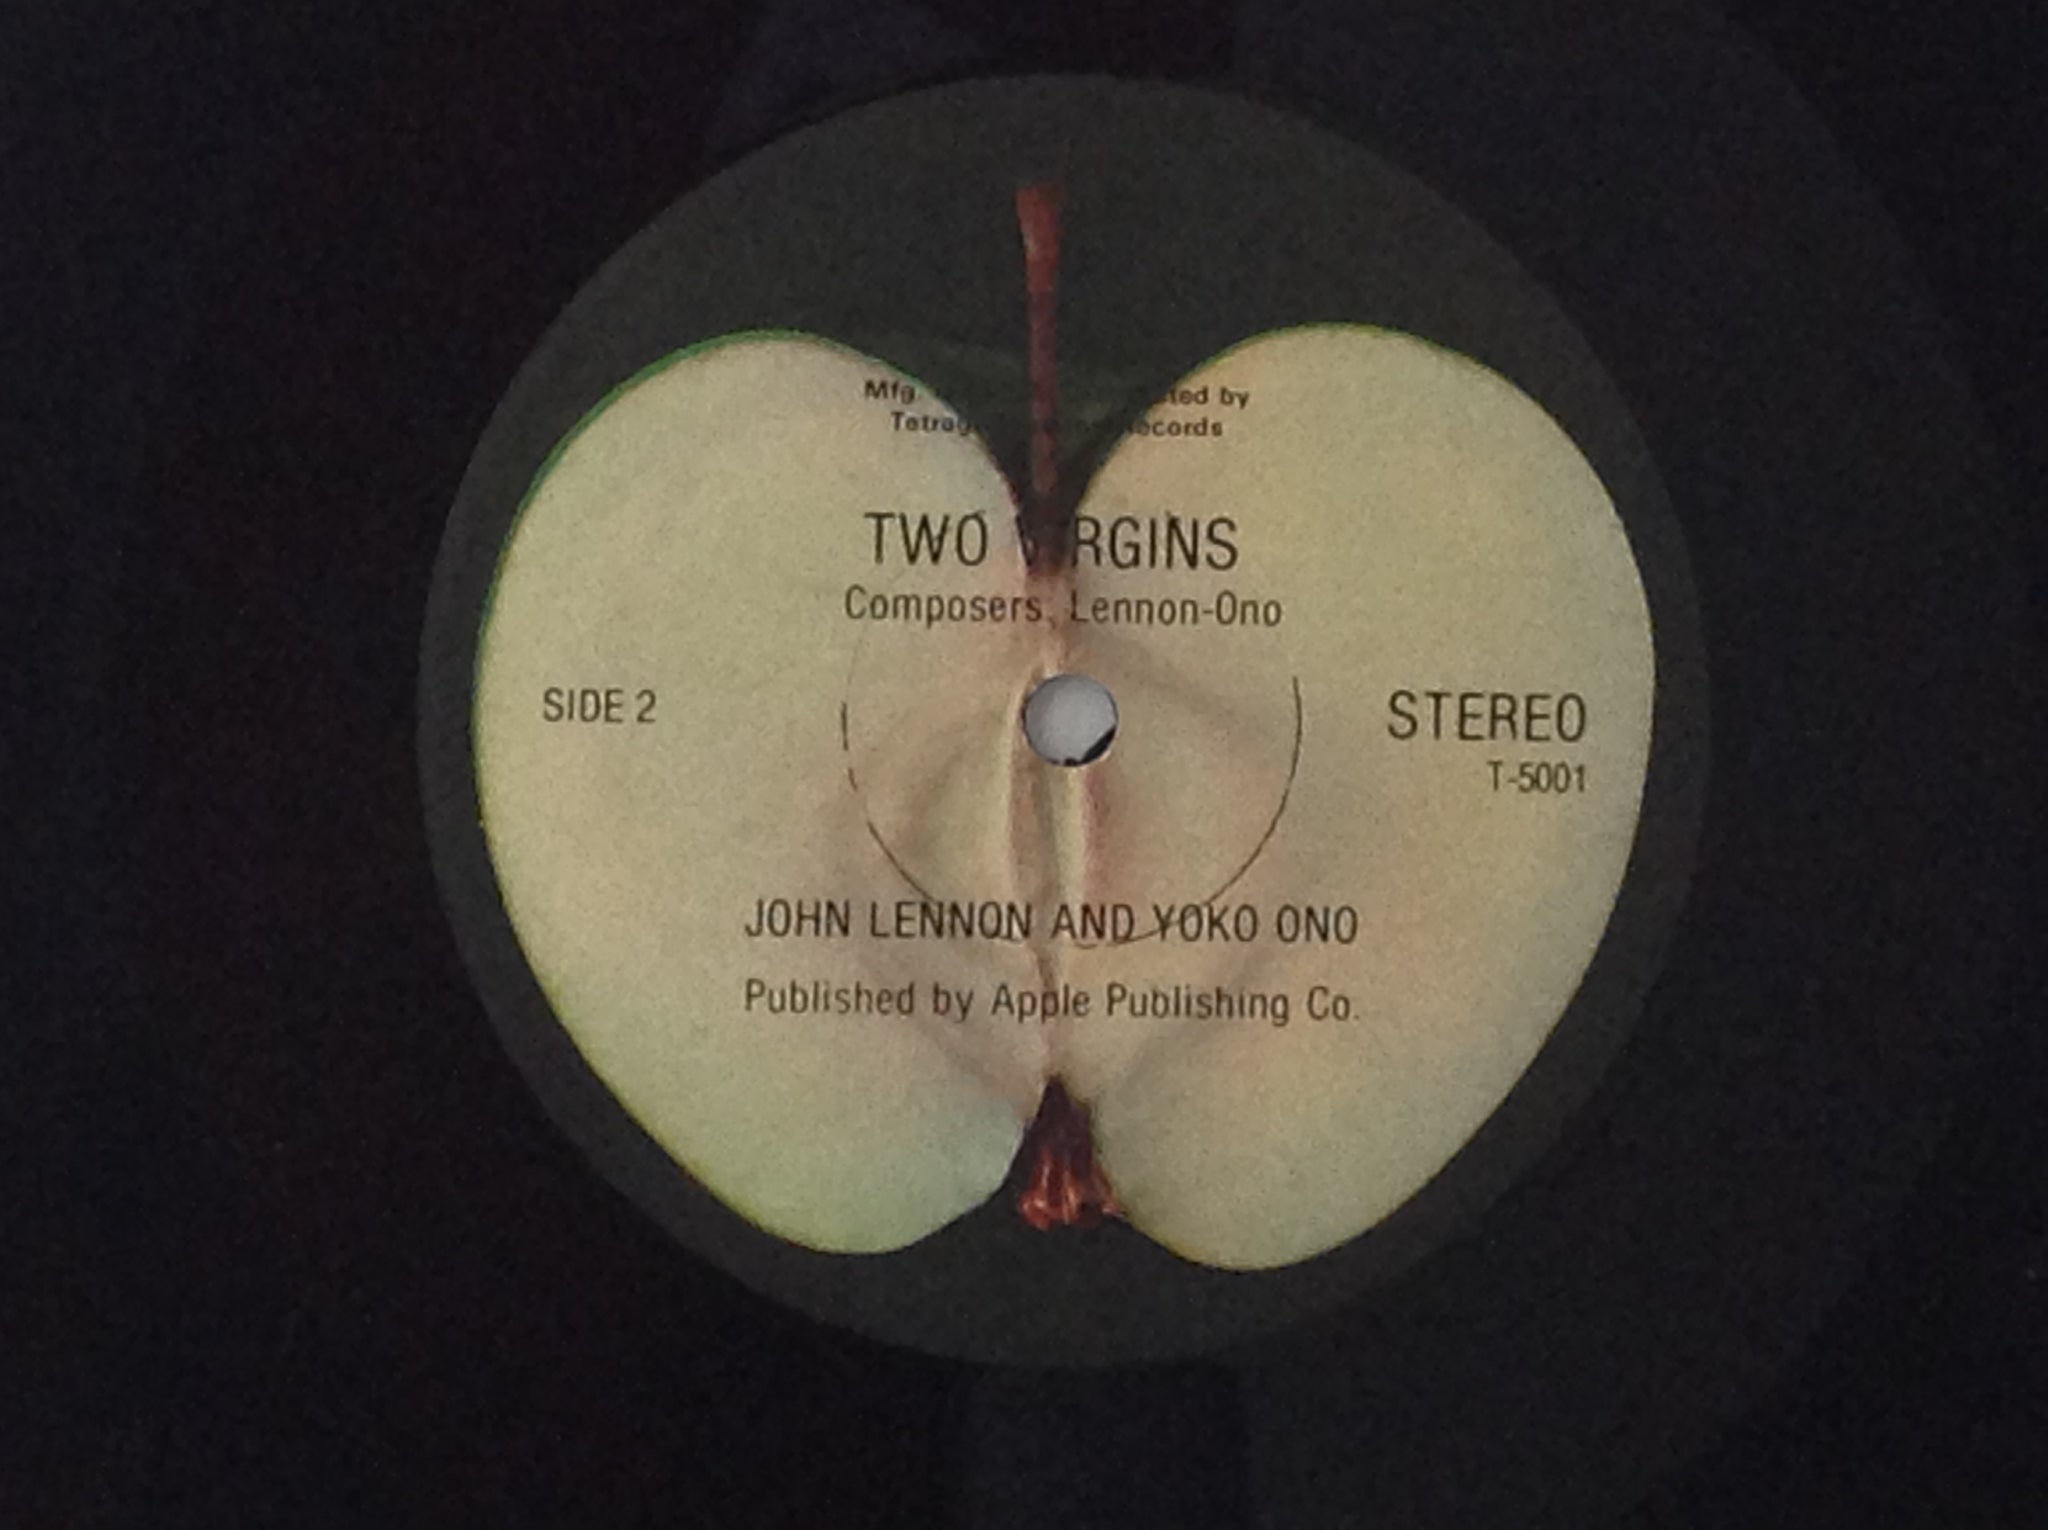 John Lennon/Yoko Ono, Two Virgins - egidiusamsterdam.com